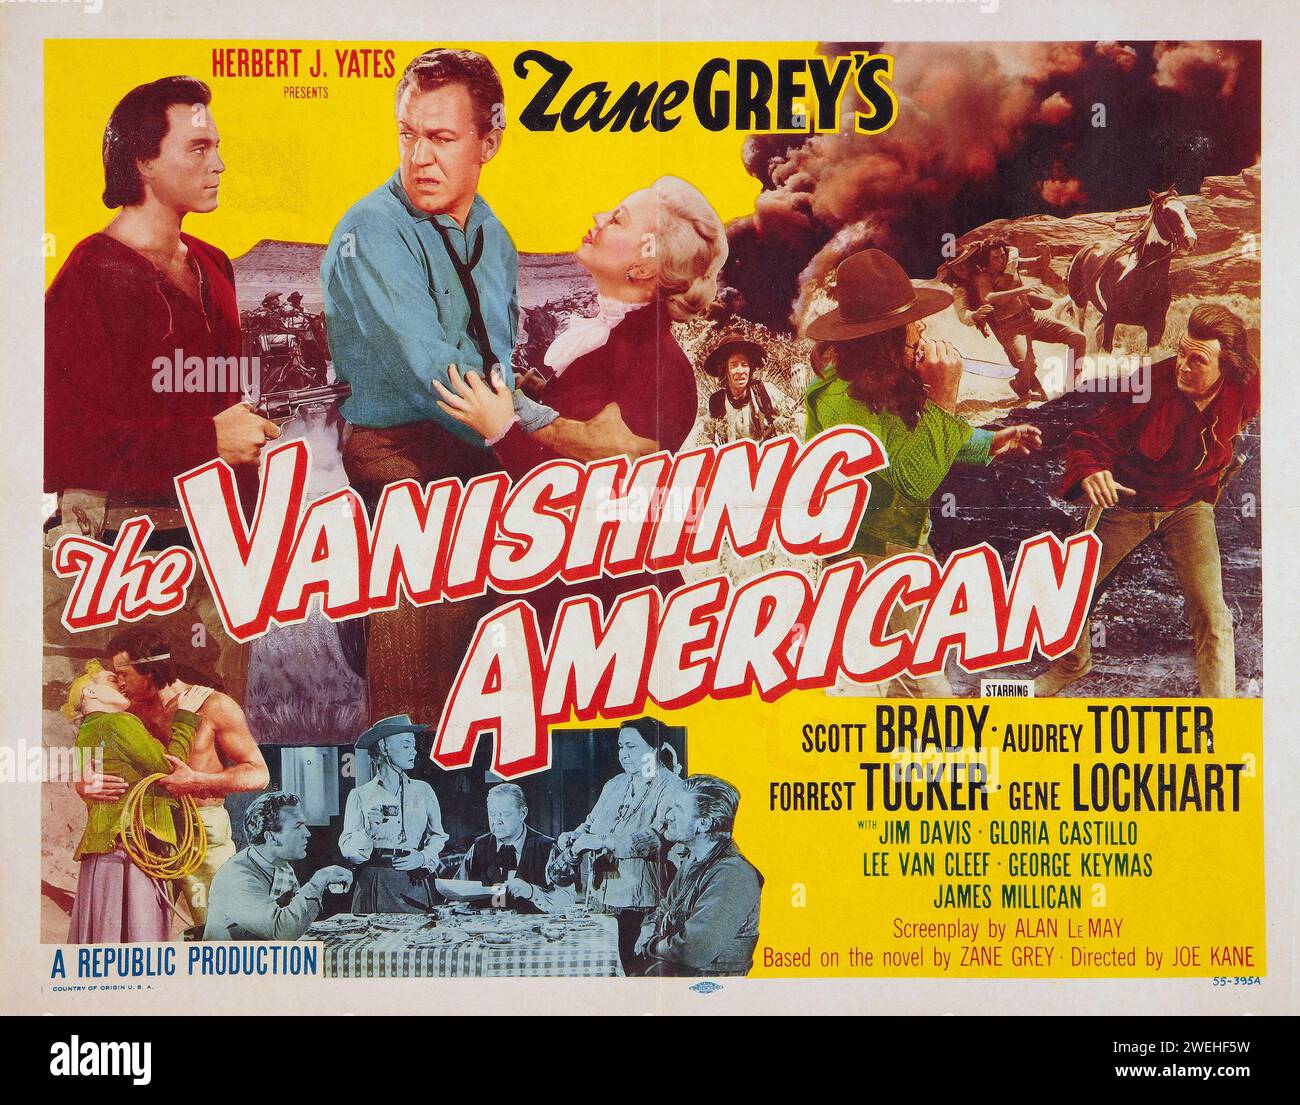 Old 1950s film poster - Zane Grey's The Vanishing American (Republic, 1955) Starring Scott Brady - Cowboy - Indians - Western Stock Photo